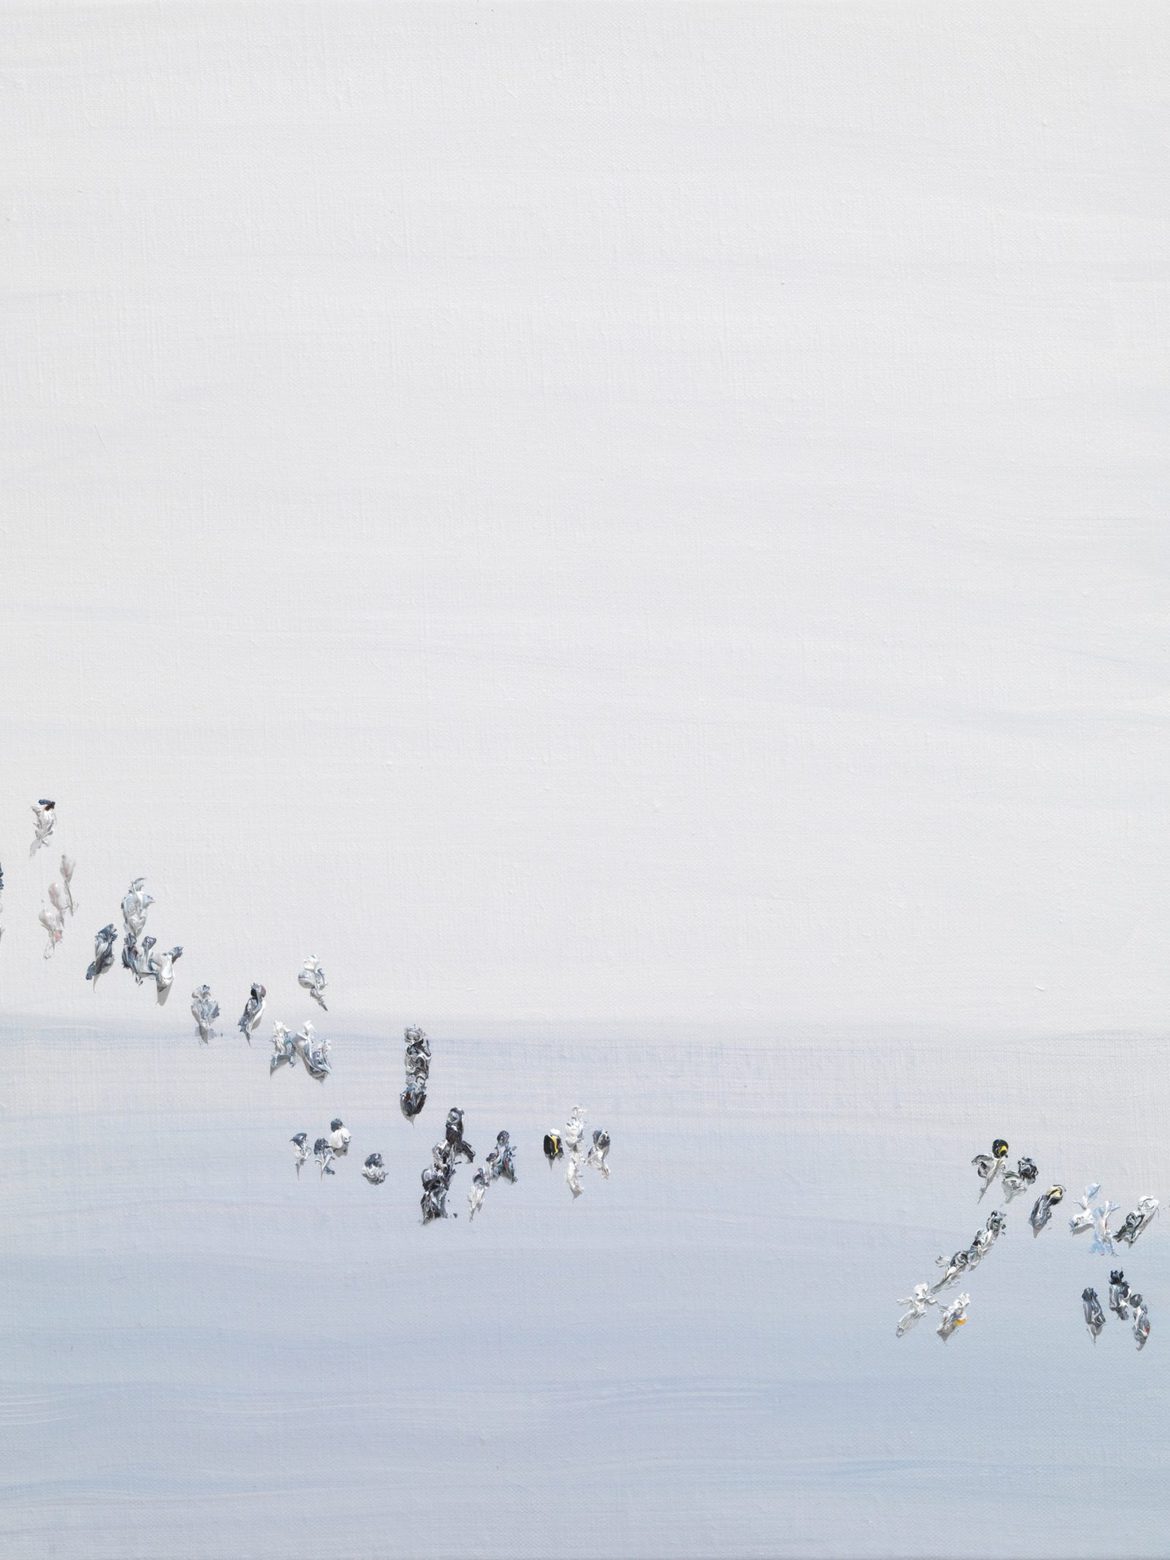 Clemens Krauss, ‘Single Files', 2018, oil on canvas, 60 x 50cm